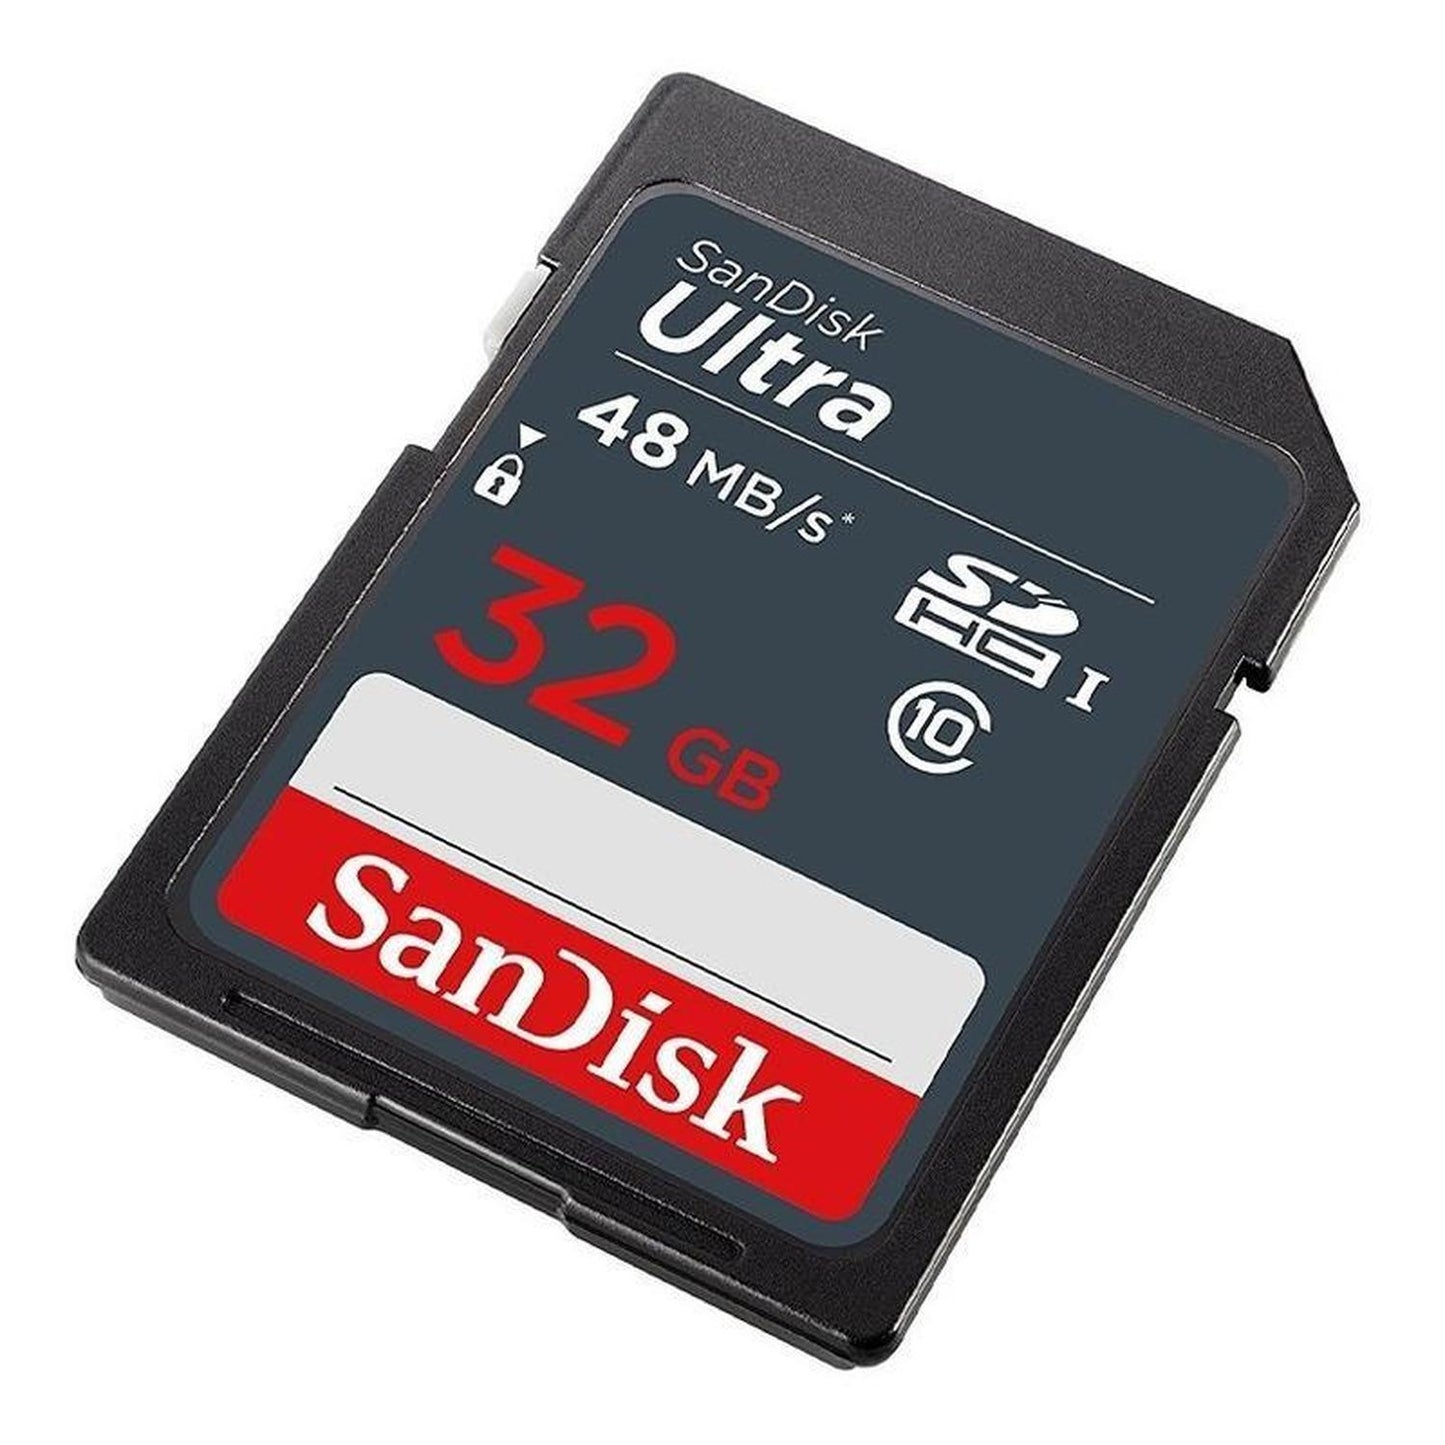 Memoria Flash SanDisk Ultra, 32GB SDHC UHS-I Clase 10